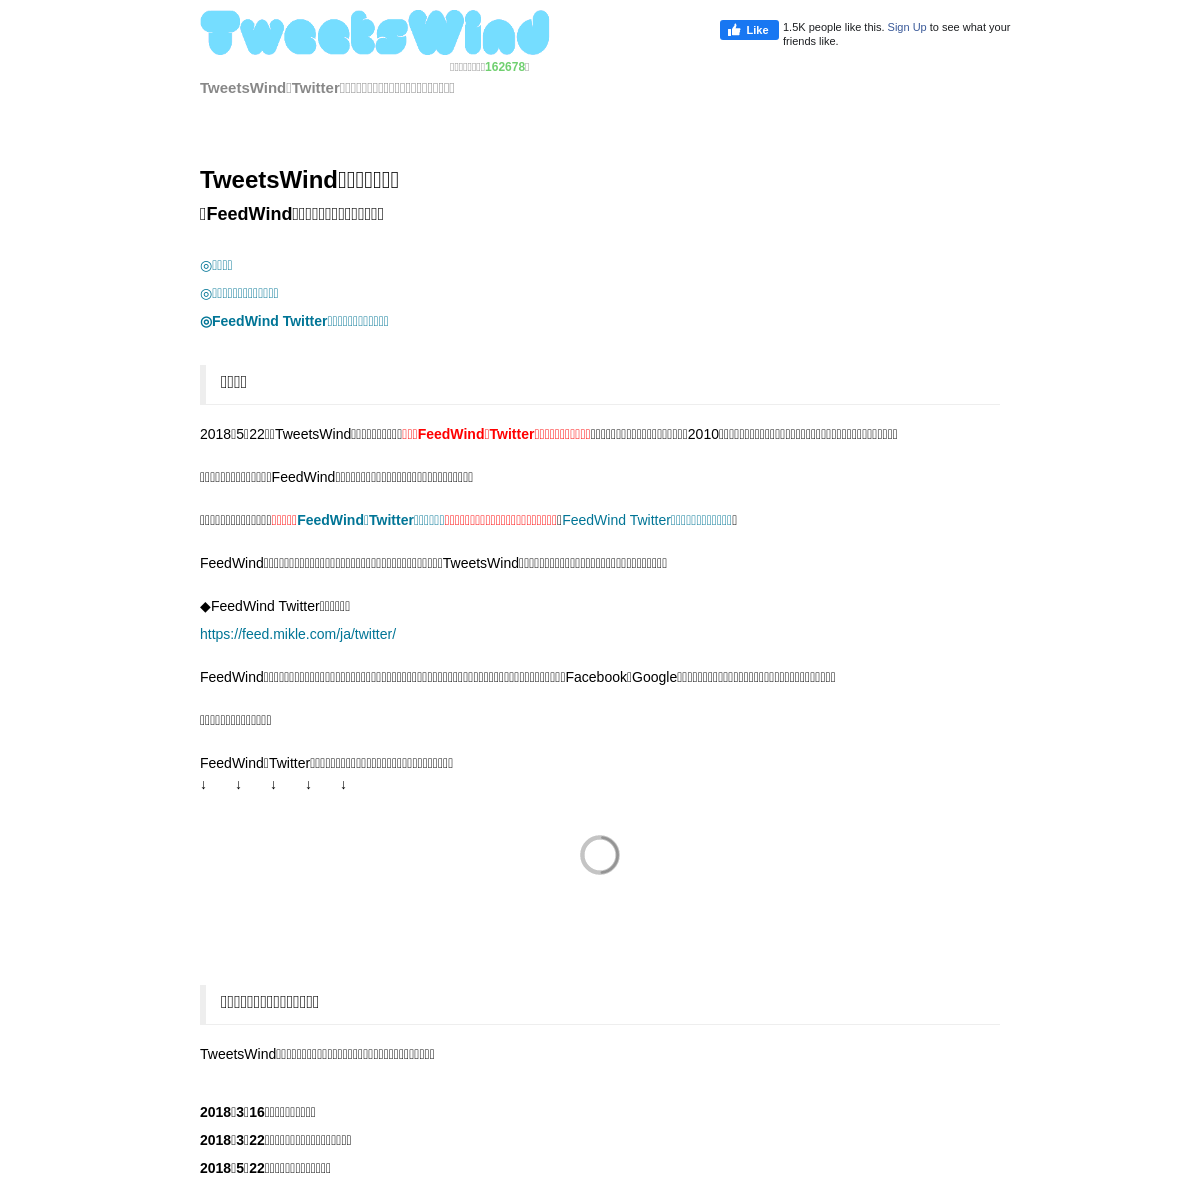 A complete backup of tweetswind.com